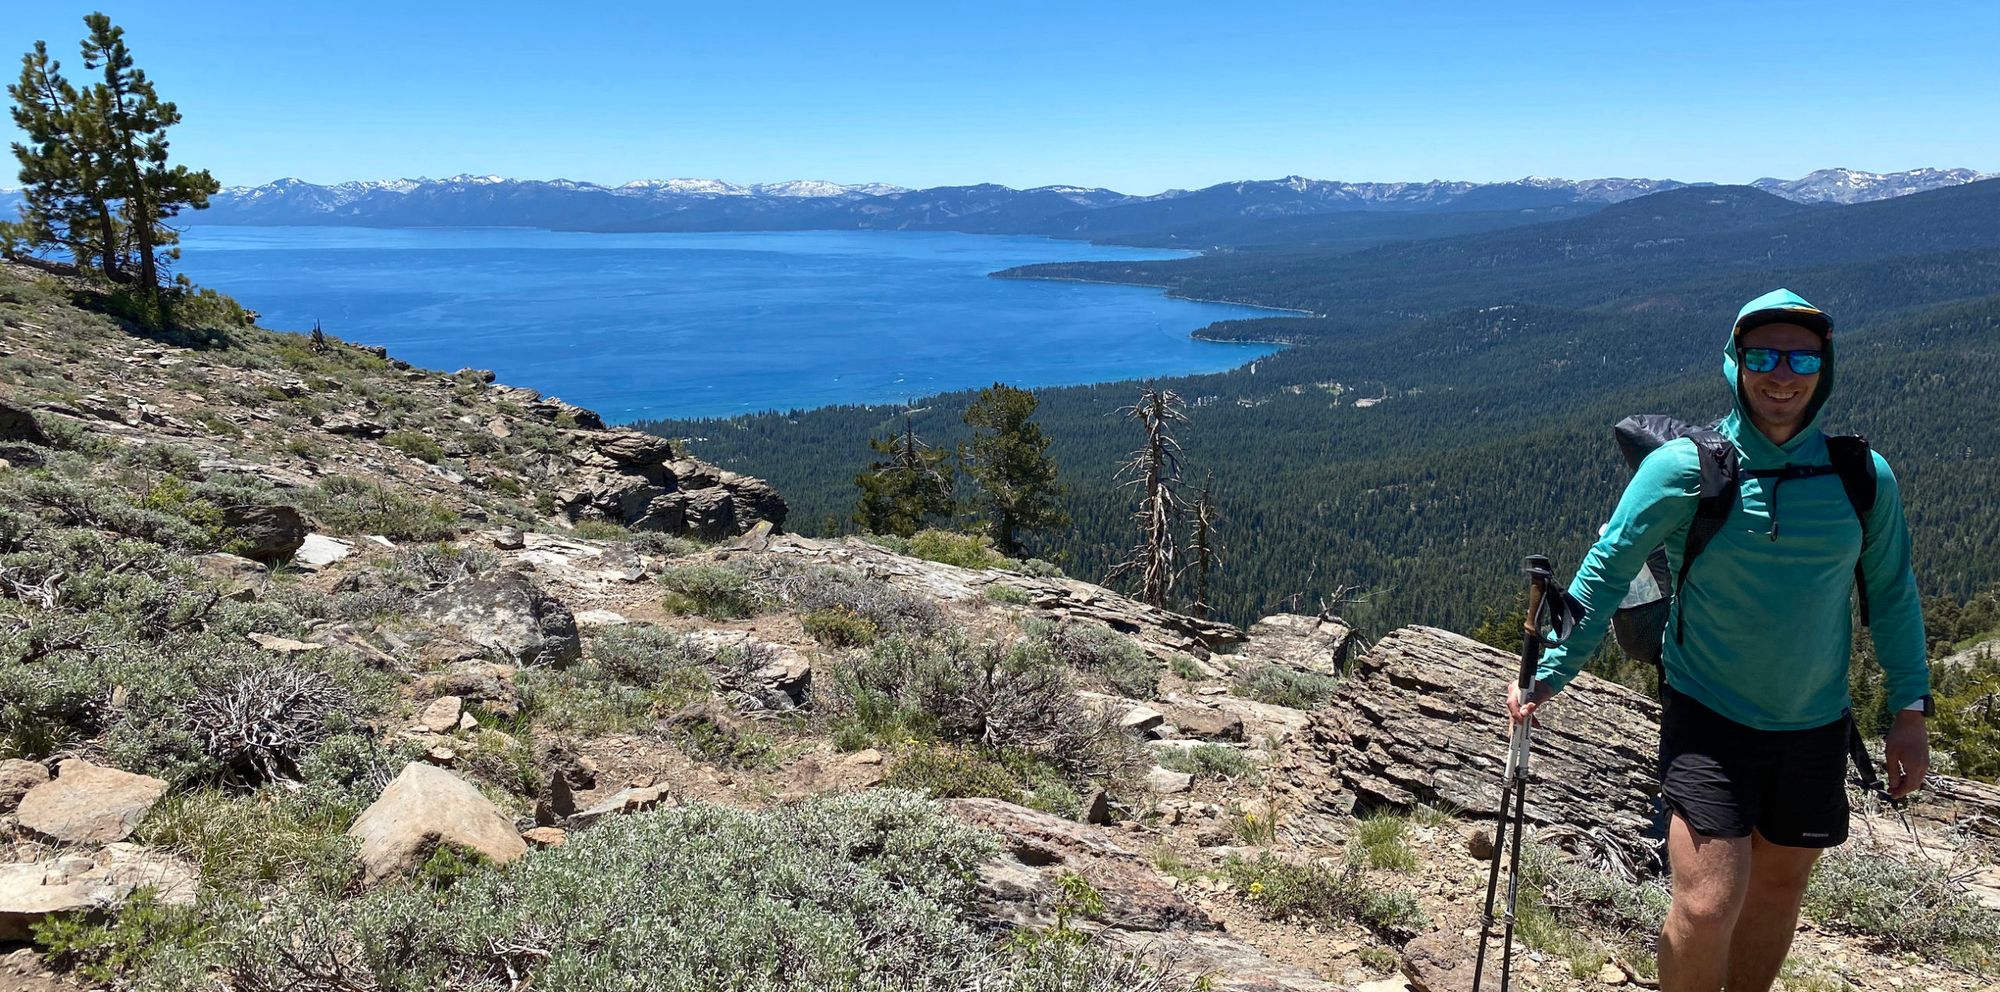 Tahoe Rim Trail 2021 trip report – 8 days, 182 miles